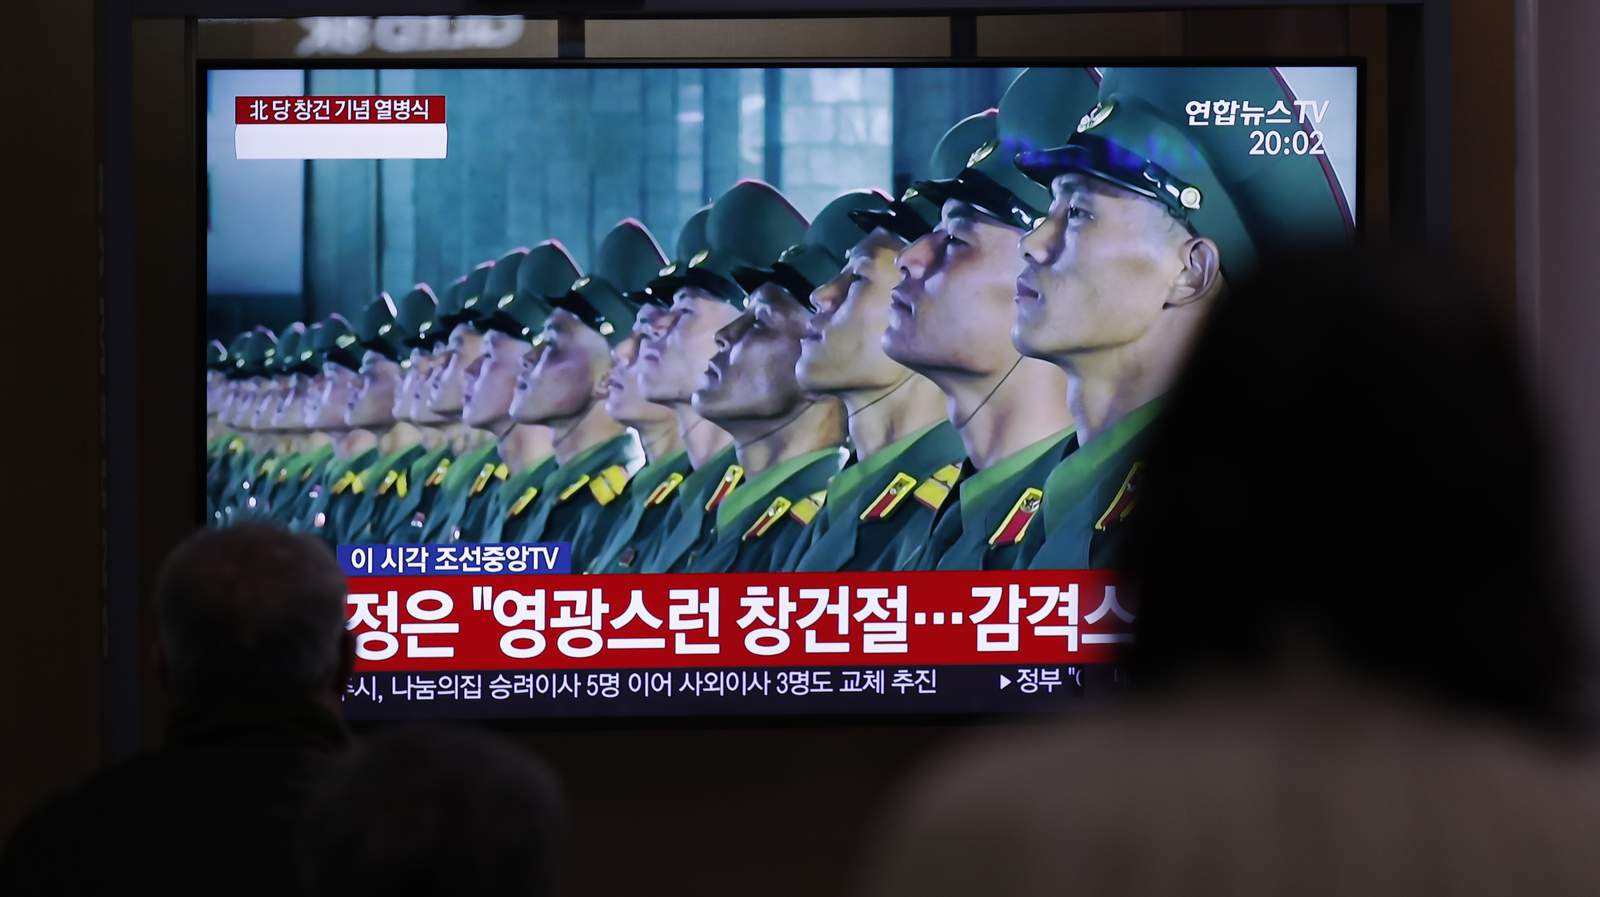 North Korea celebrates party anniversary amid economic woes